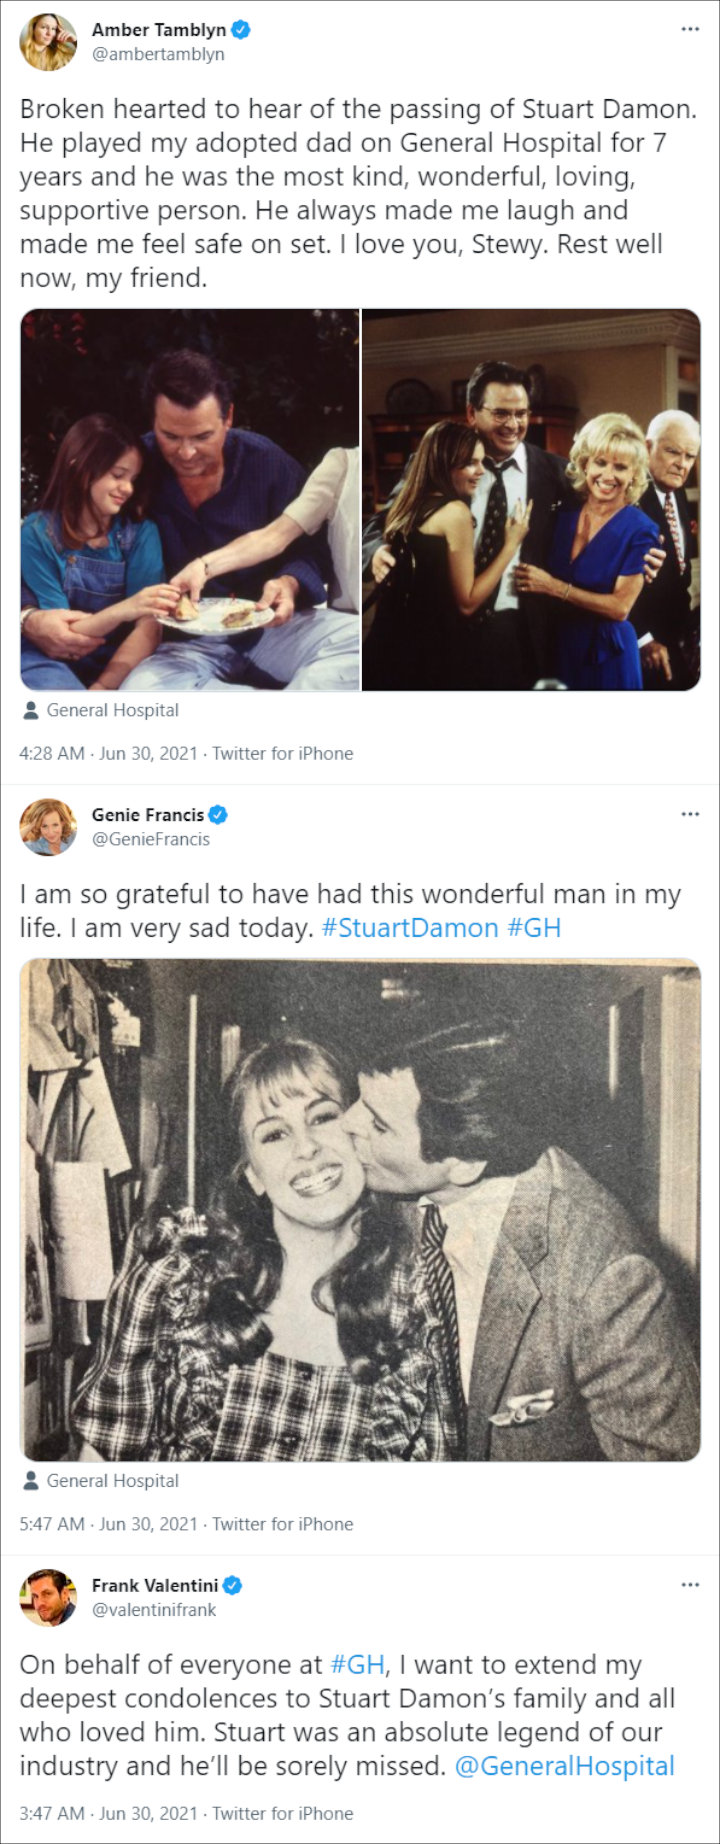 Amber Tamblyn, Genie Francis and Frank Valentini's Tweets